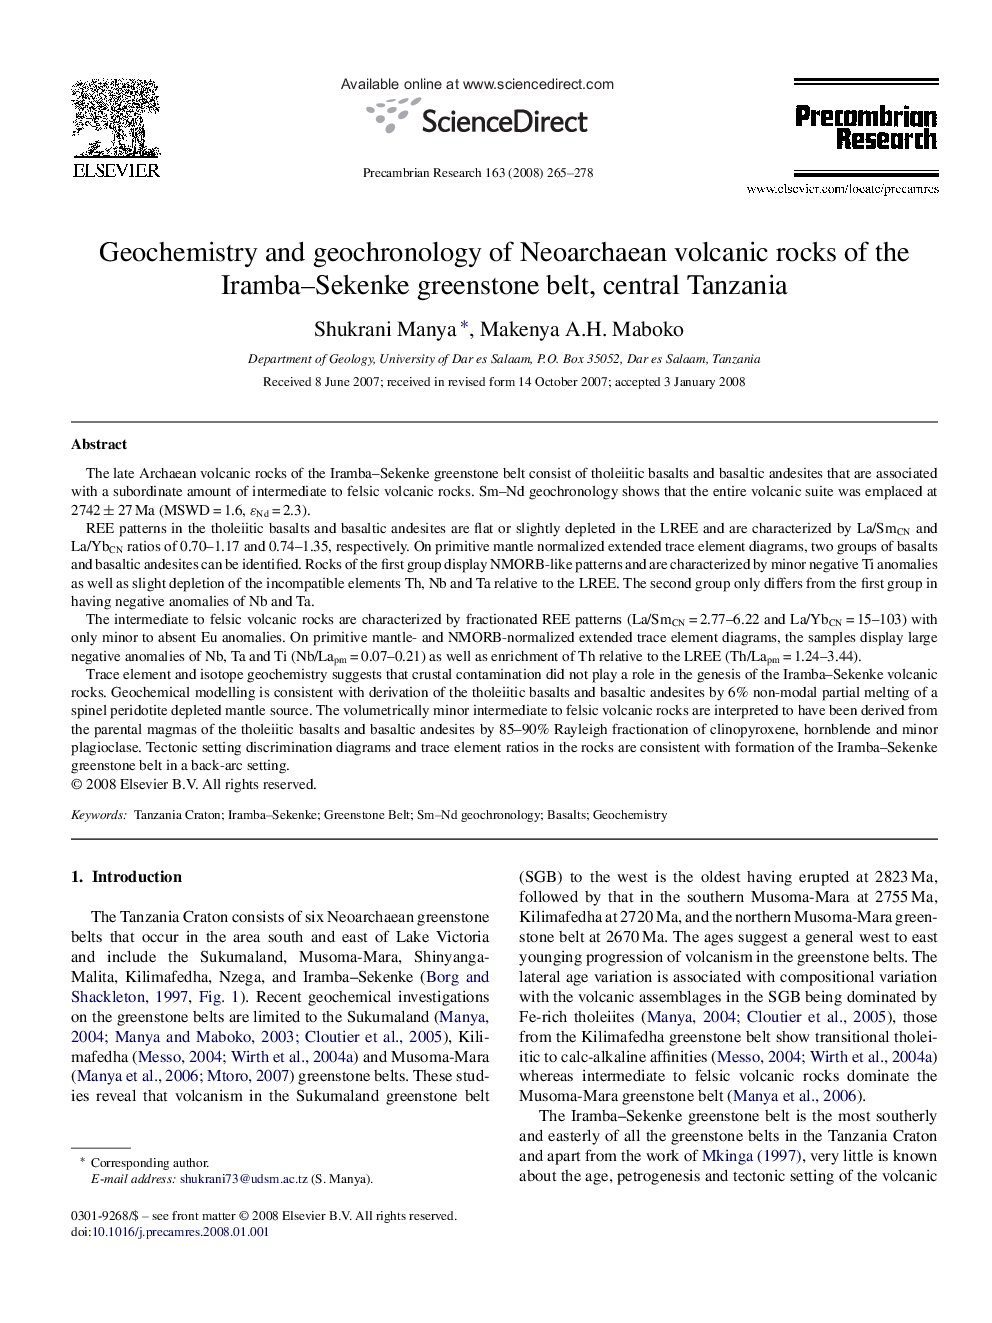 Geochemistry and geochronology of Neoarchaean volcanic rocks of the Iramba–Sekenke greenstone belt, central Tanzania